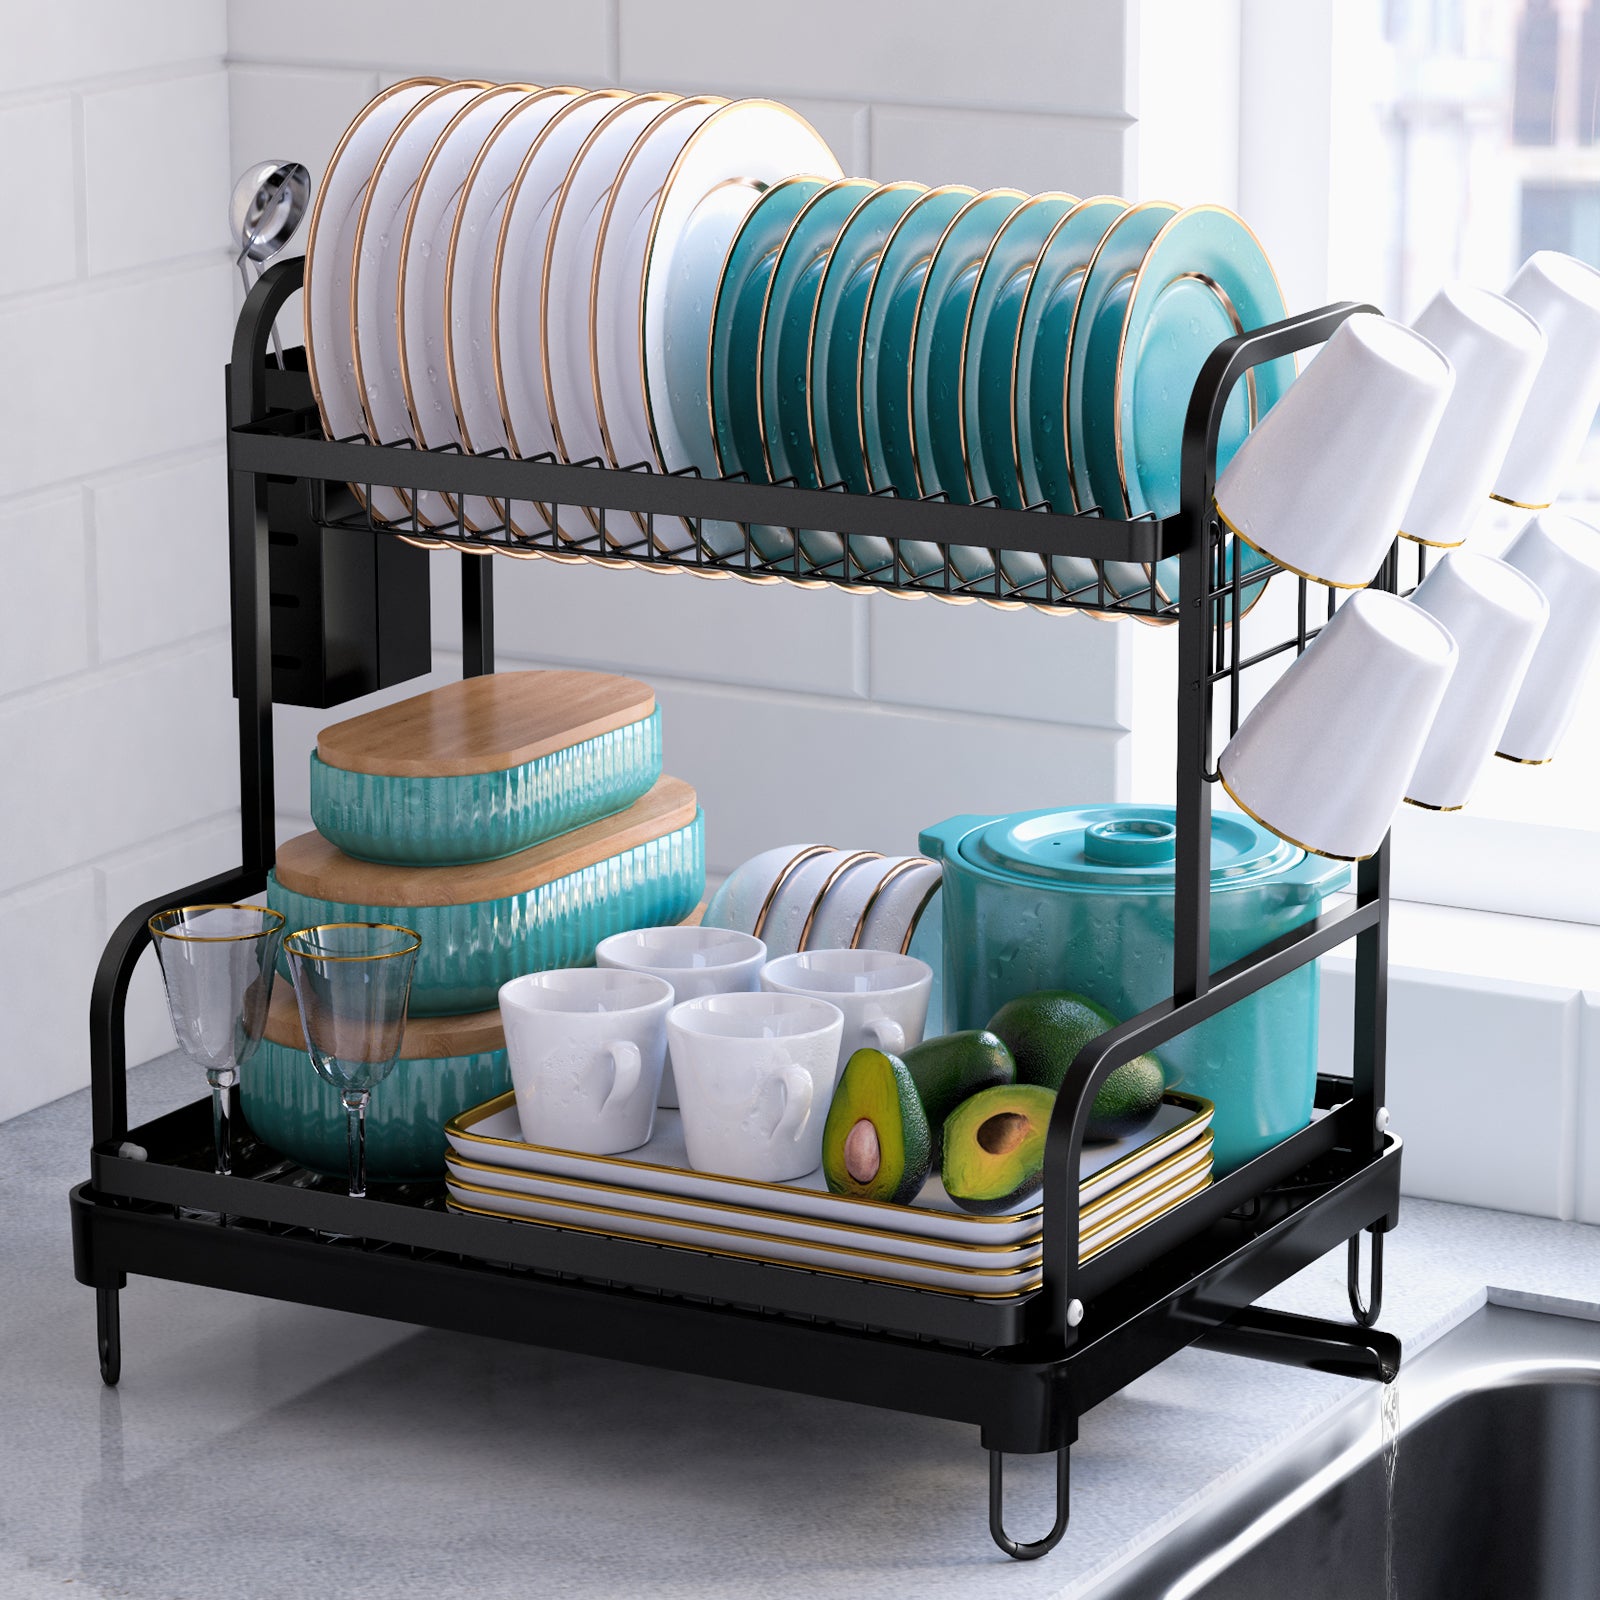 2 Tier Dish Rack, Large Capacity Dish Drainer Organizer Shelf with